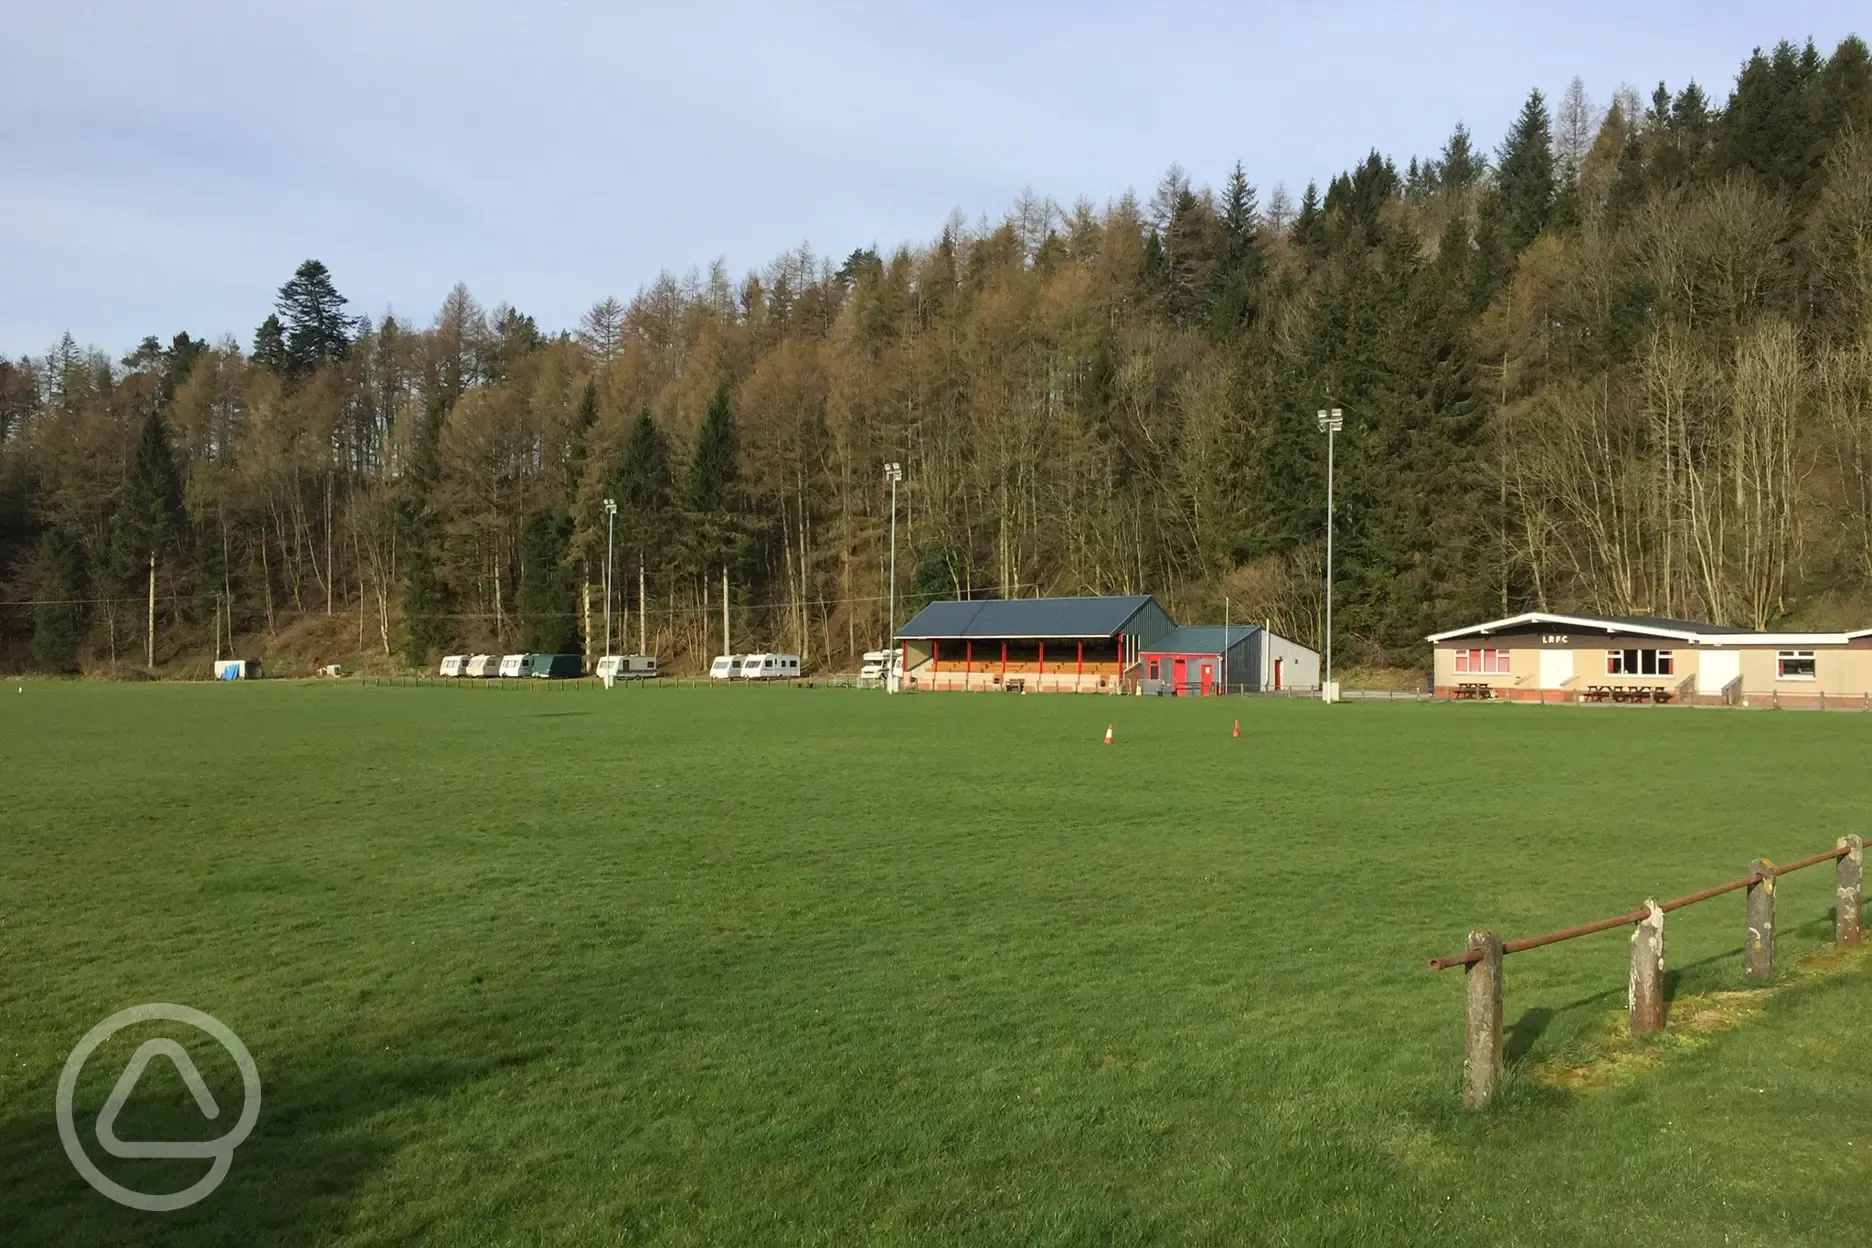 Adjacent rugby grounds